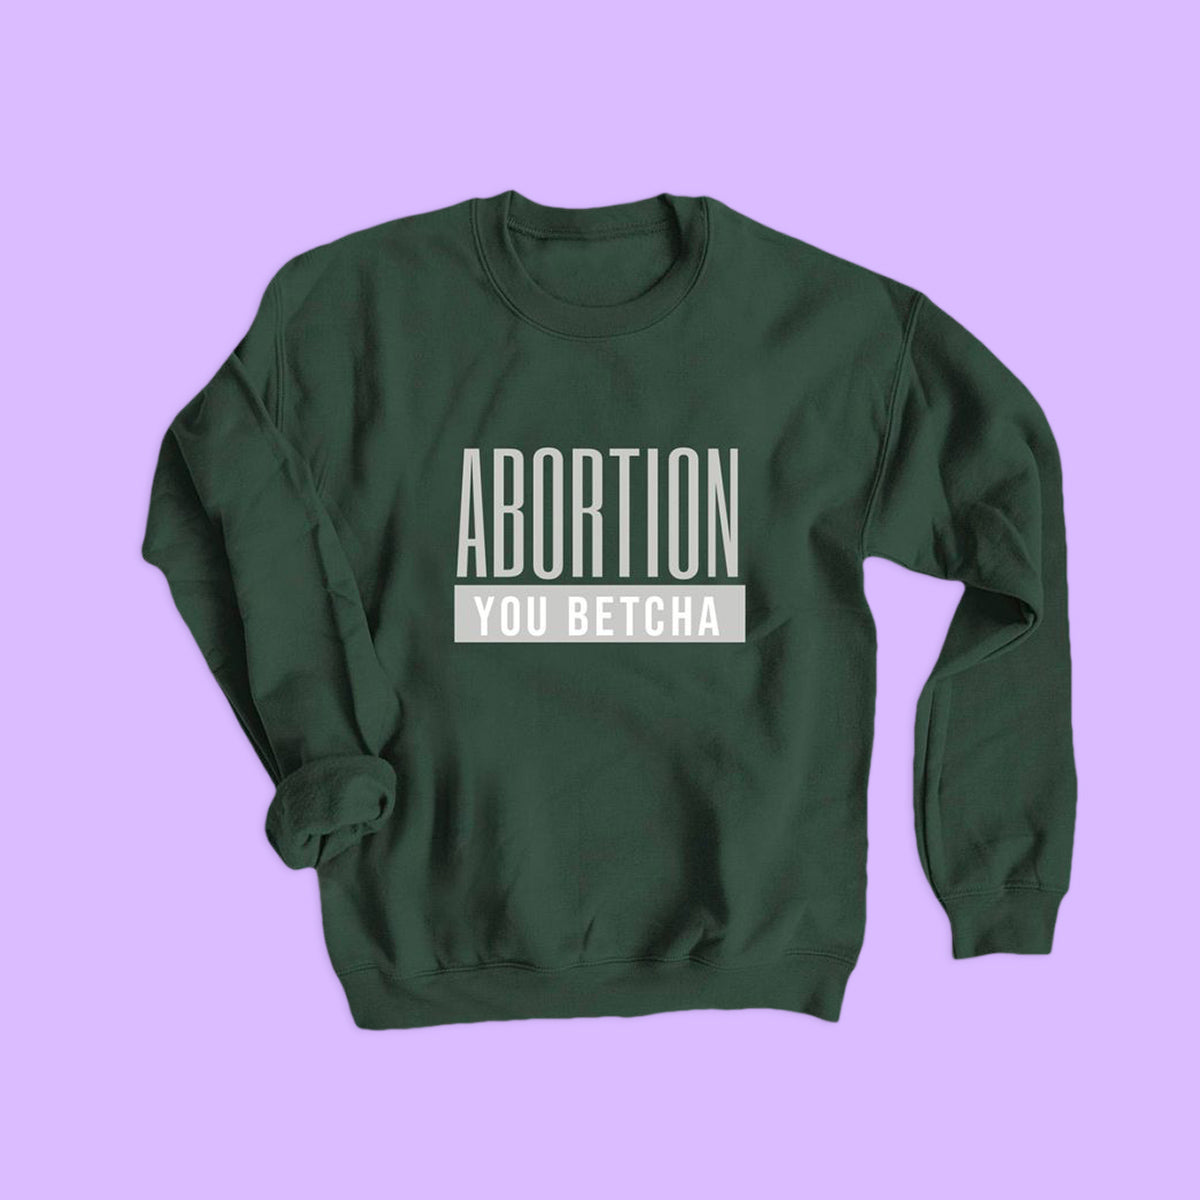 North Dakota WIN Abortion Access Fund: You Betcha sweatshirt